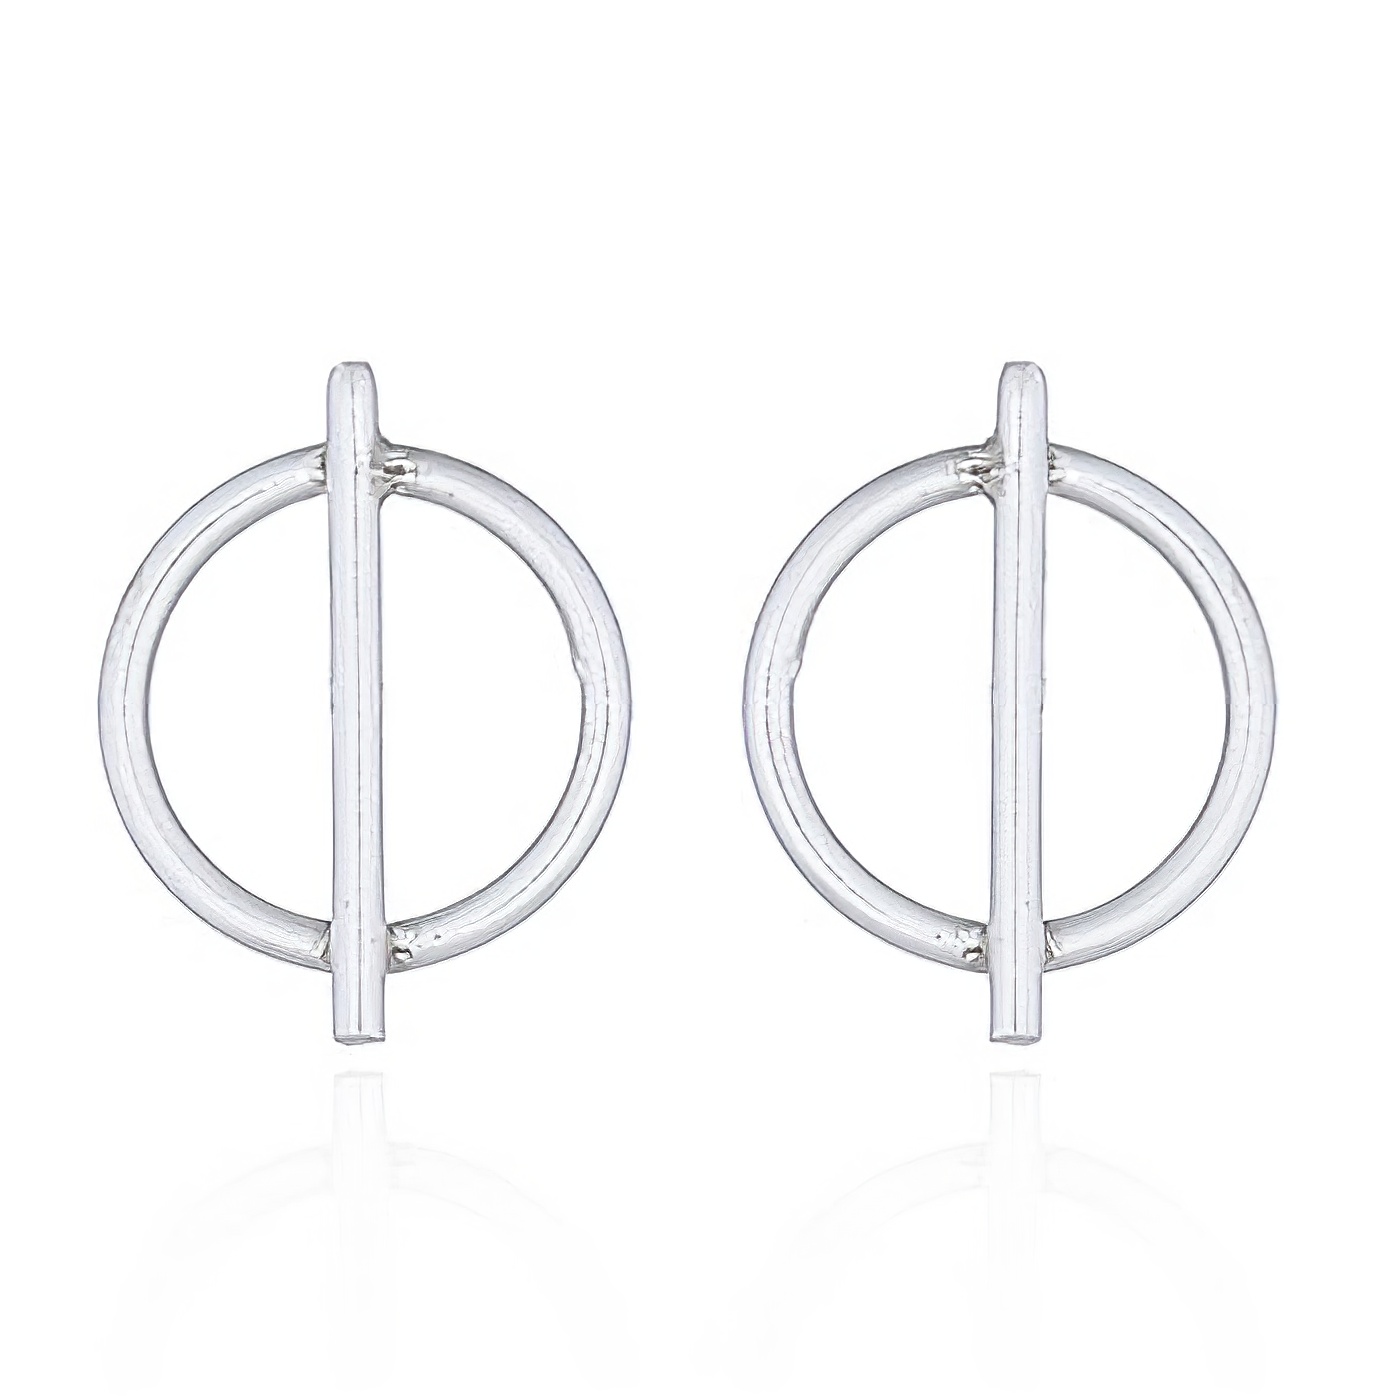 Minus Circle Plain Silver Stud Earrings by BeYindi 